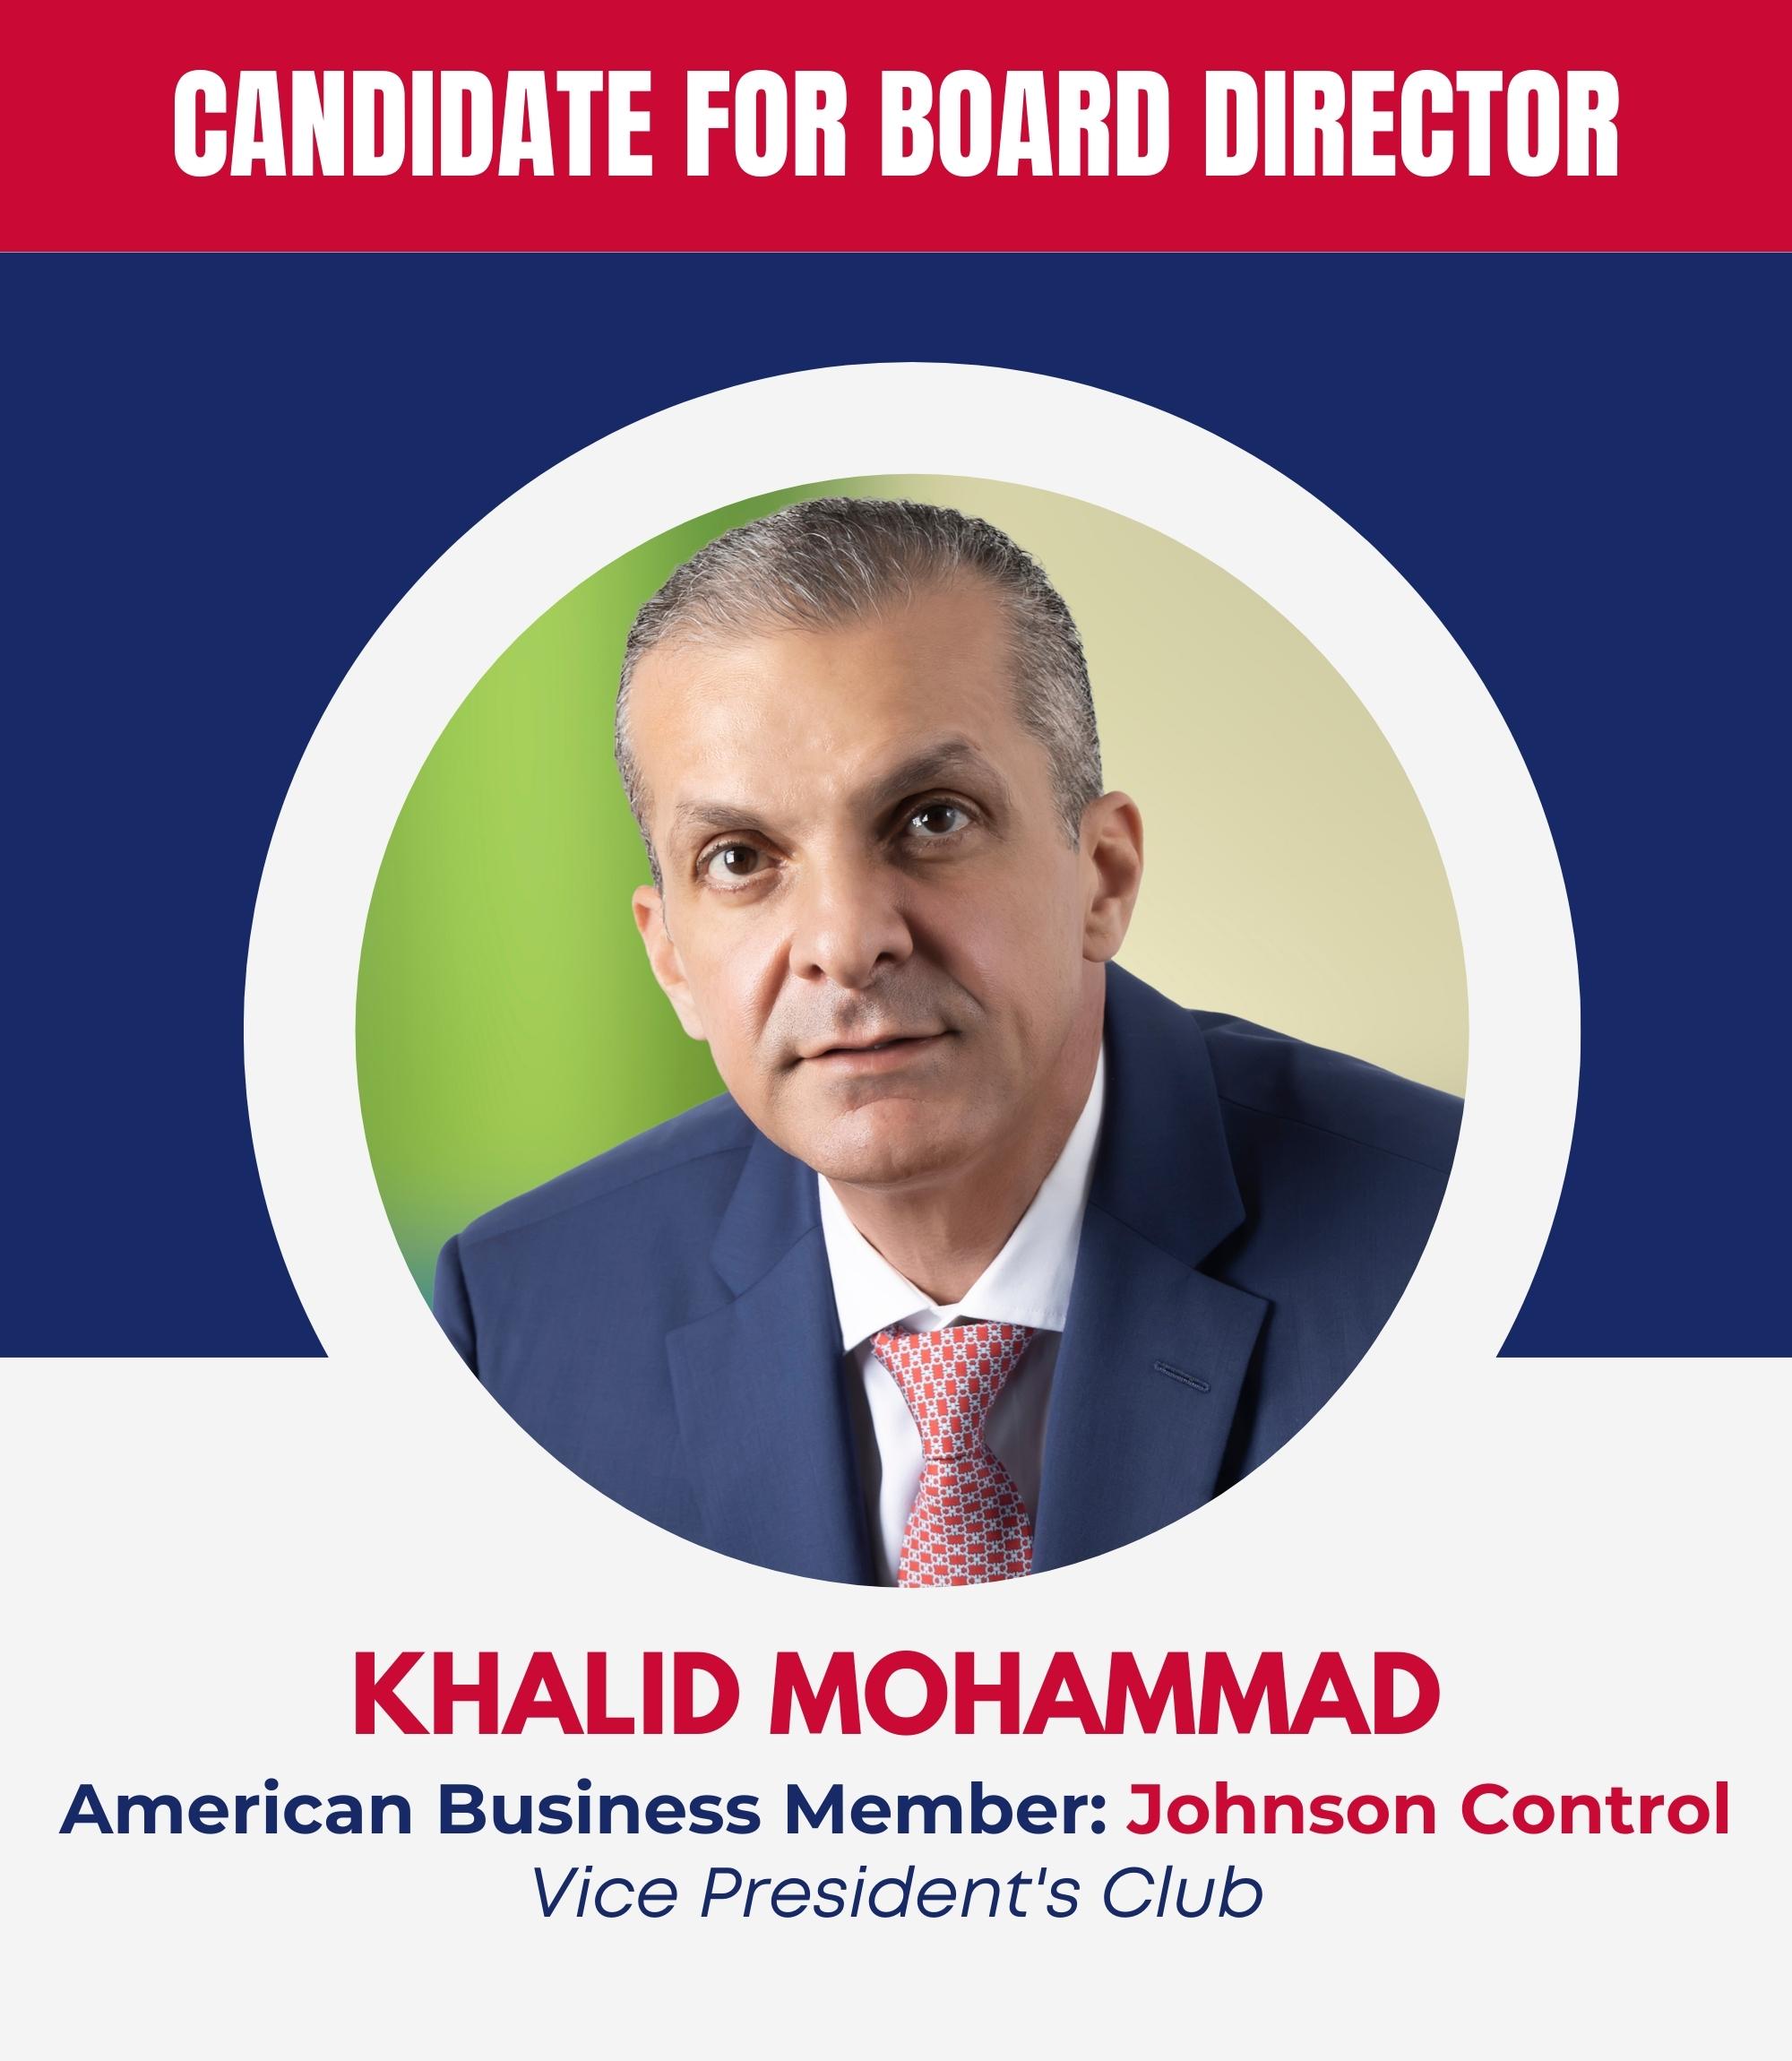 Khalid Mohammad